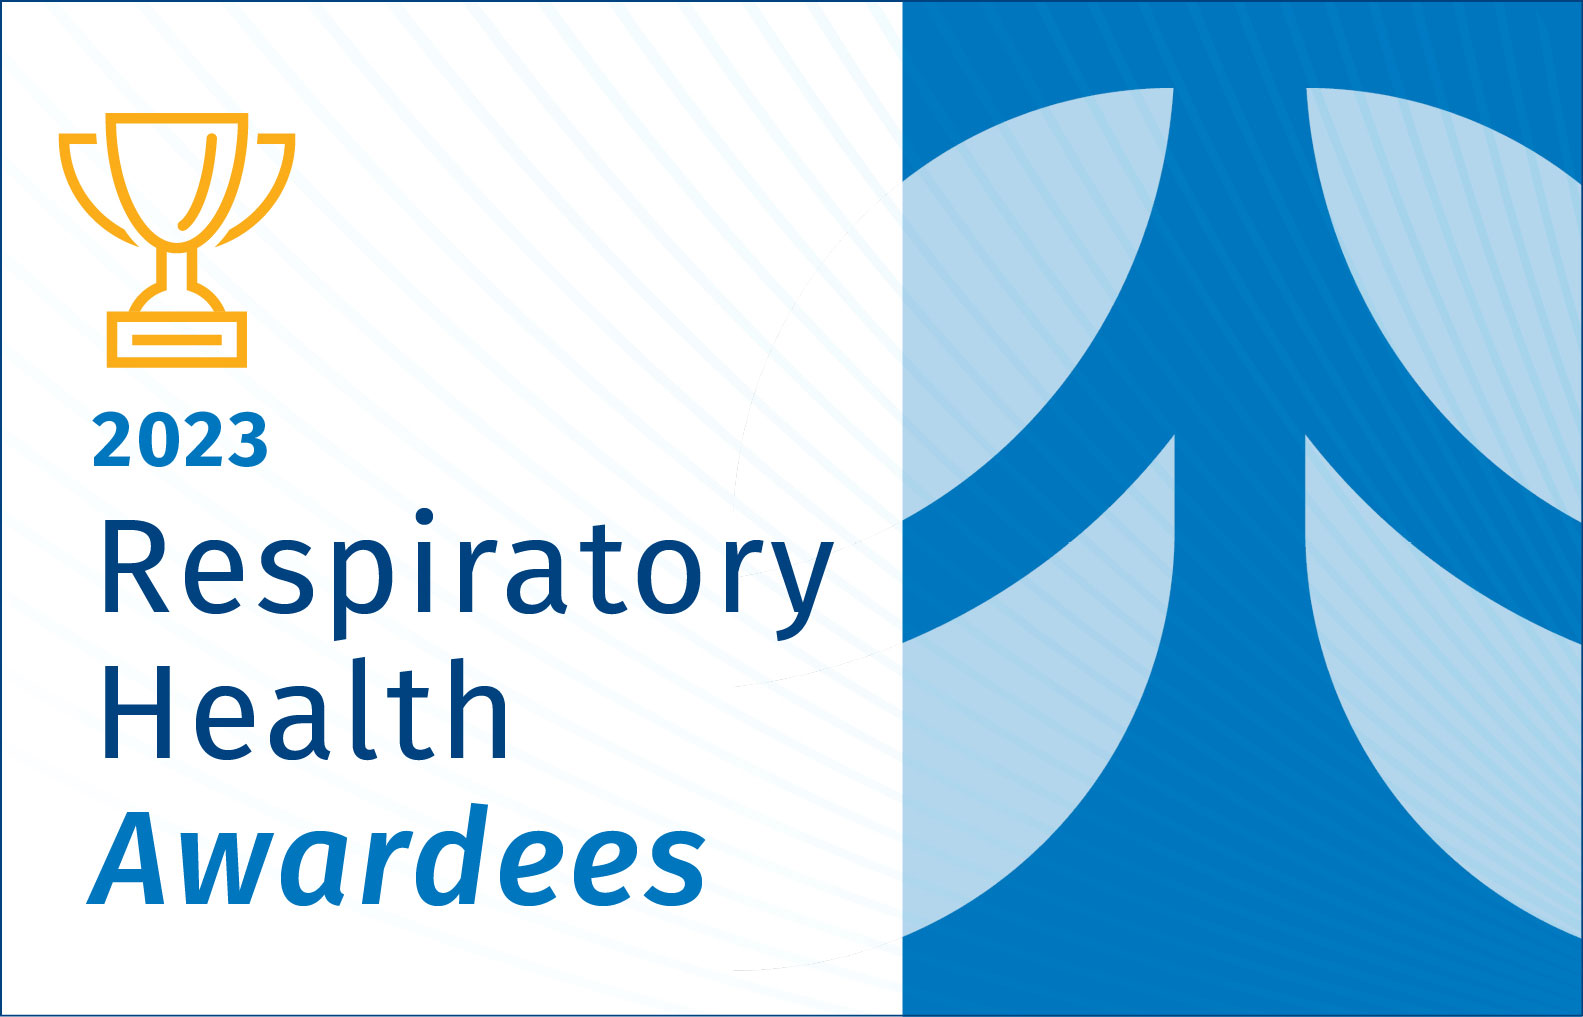 Meet the 2023 Respiratory Health Award Winners